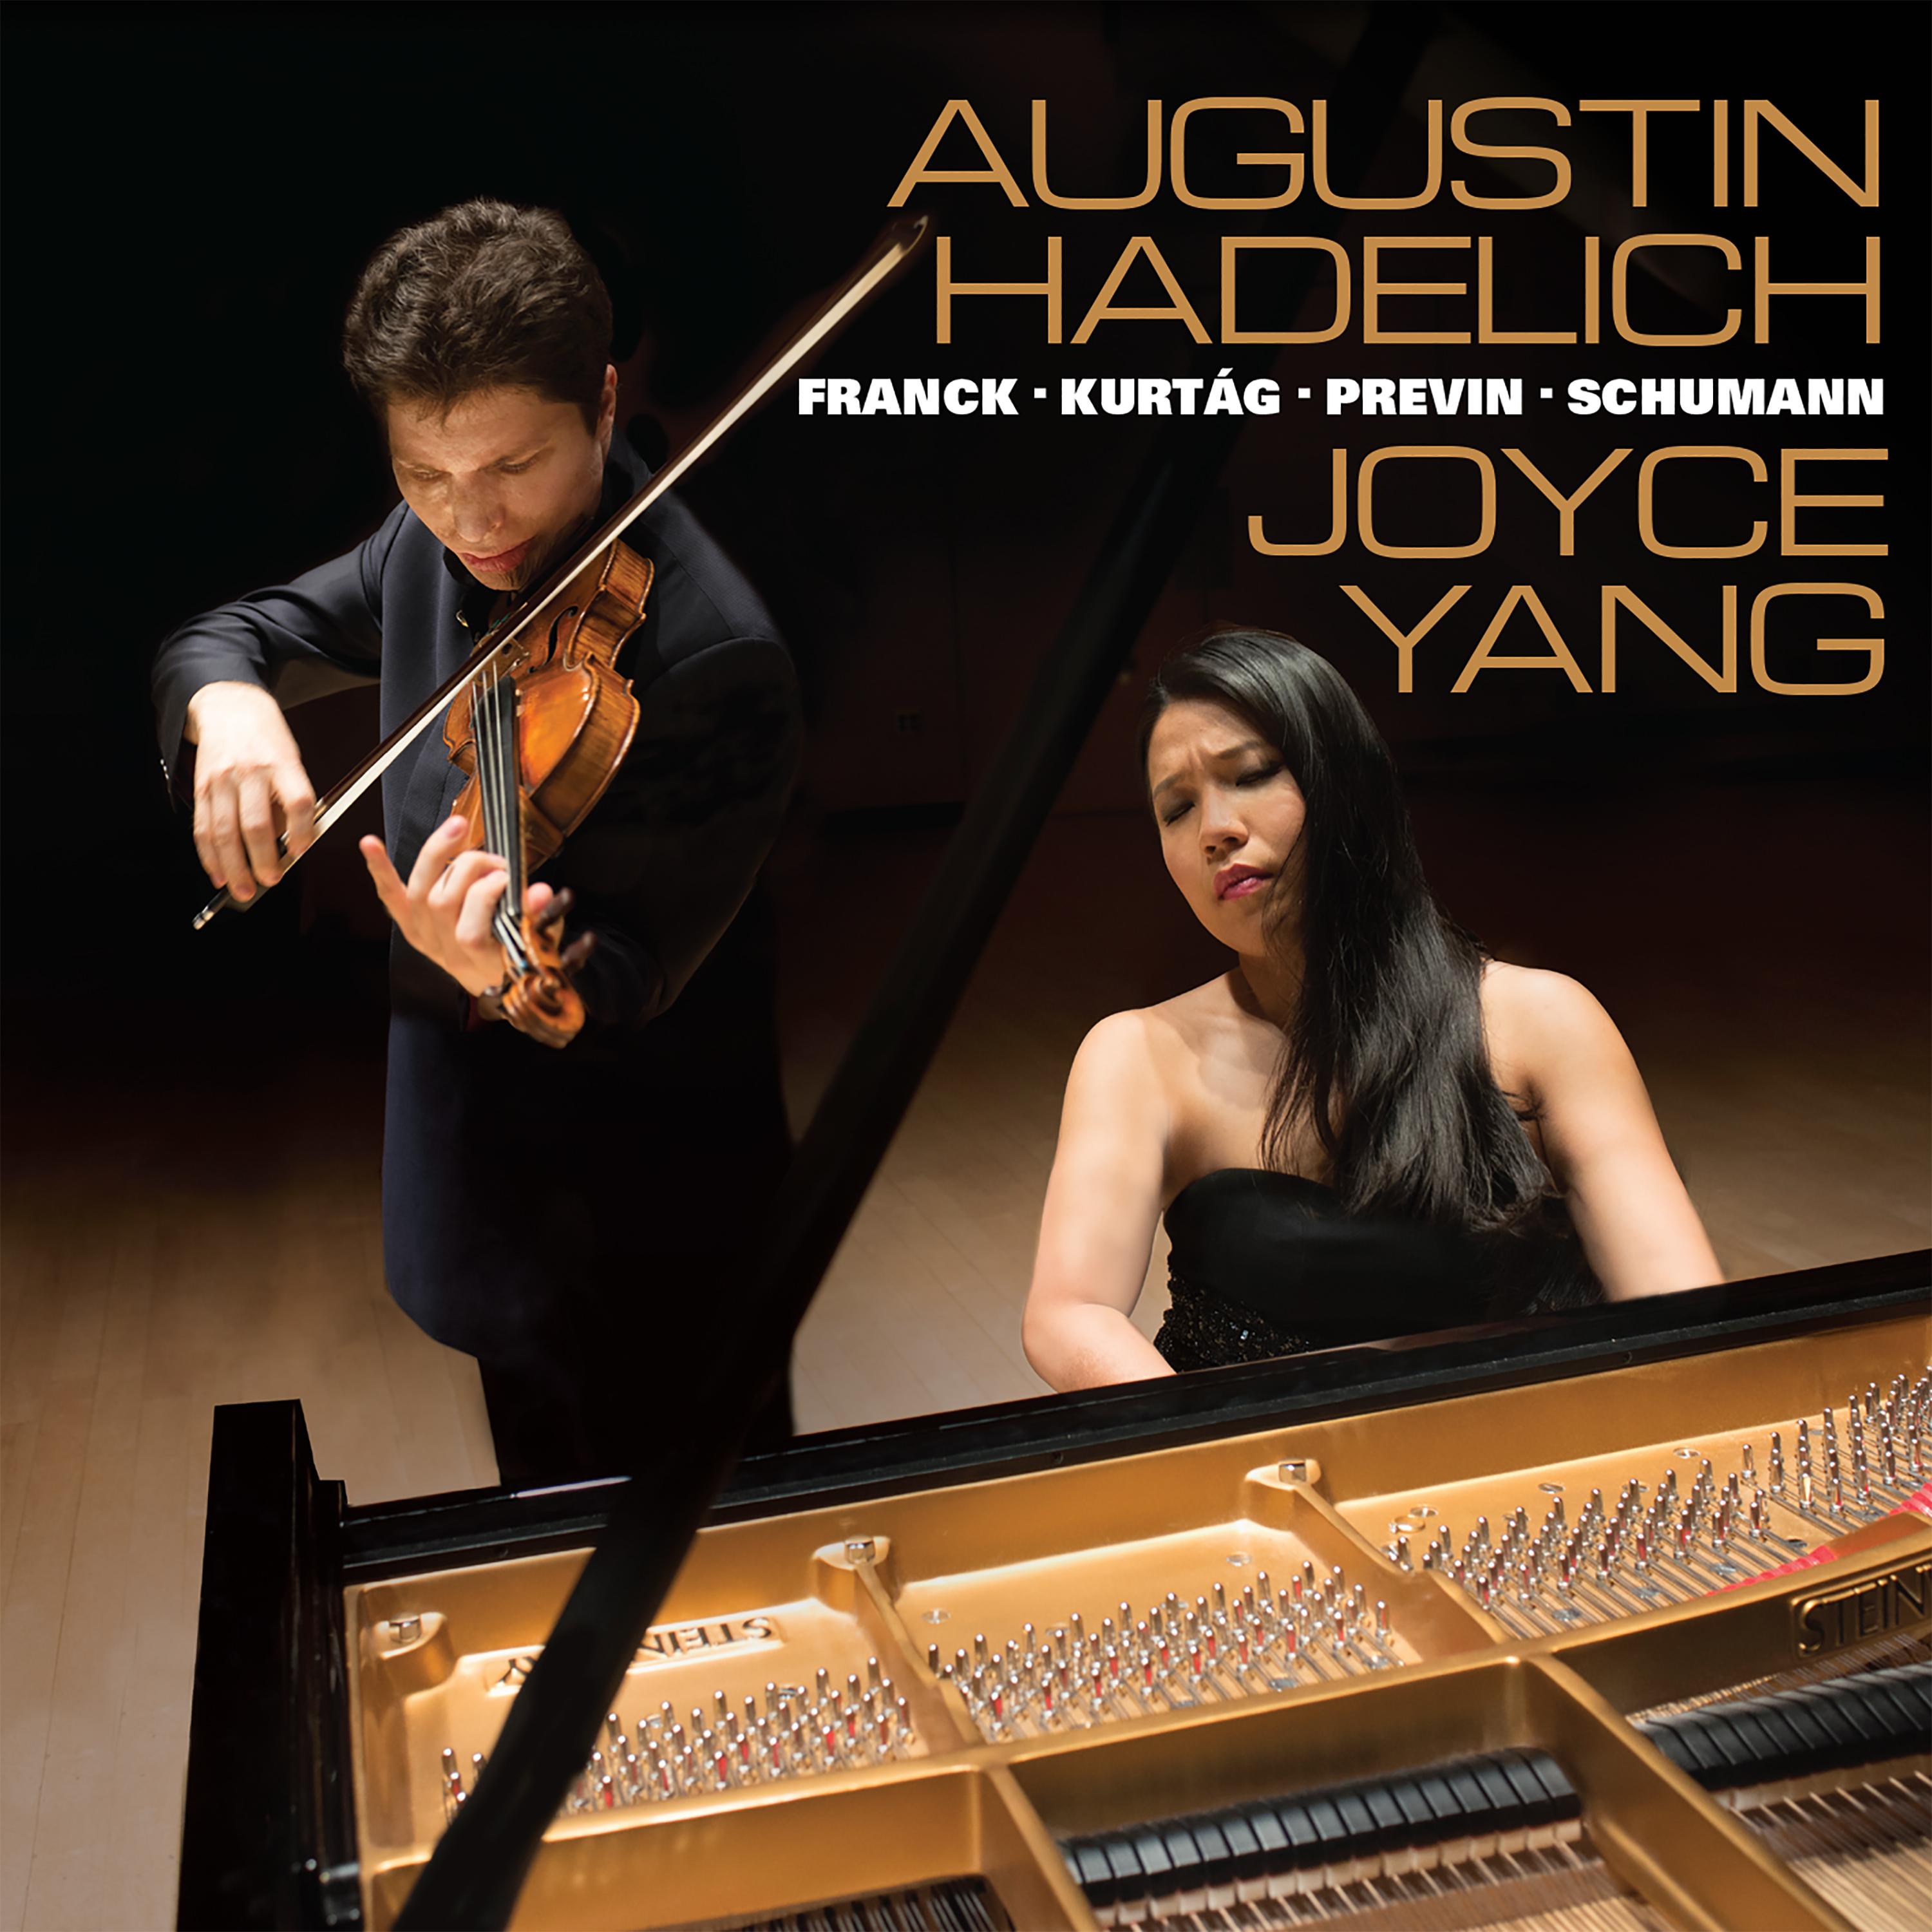 Augustin Hadelich and Joyce Yang: Works by Franck, Kurta g, Previn, Schumann